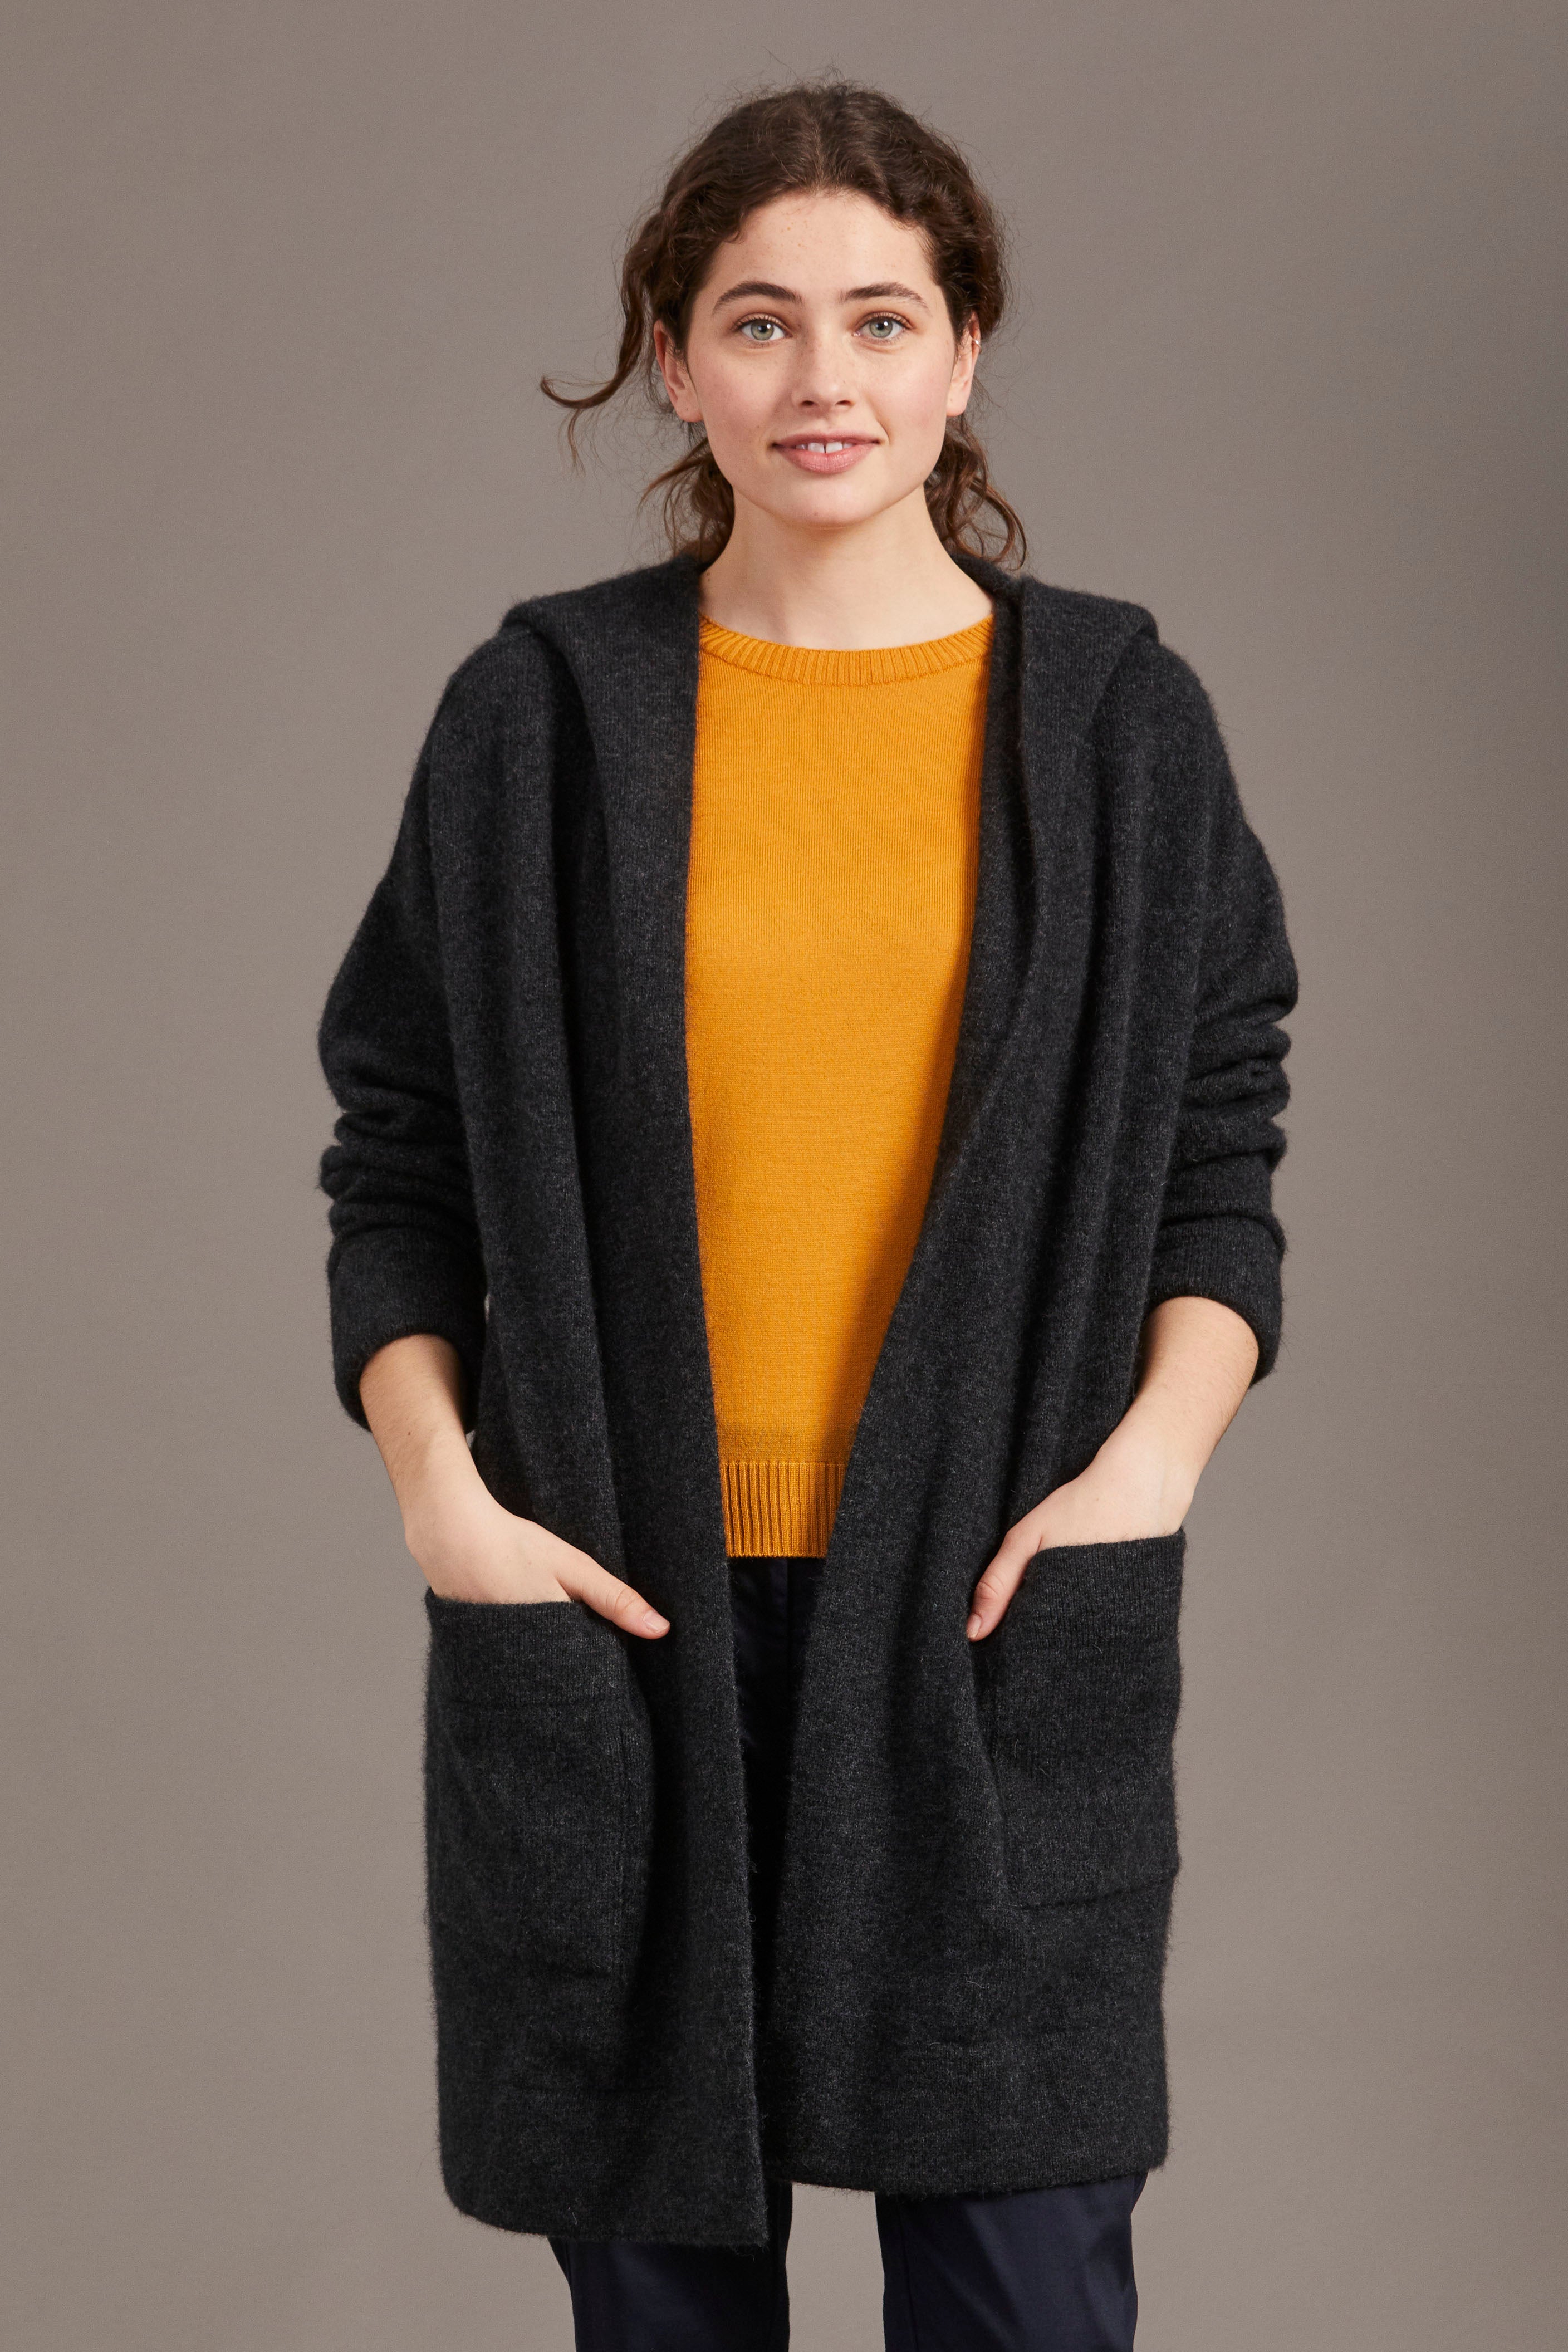 Possum Merino Oversize Hood Jacket - McDonald Textiles